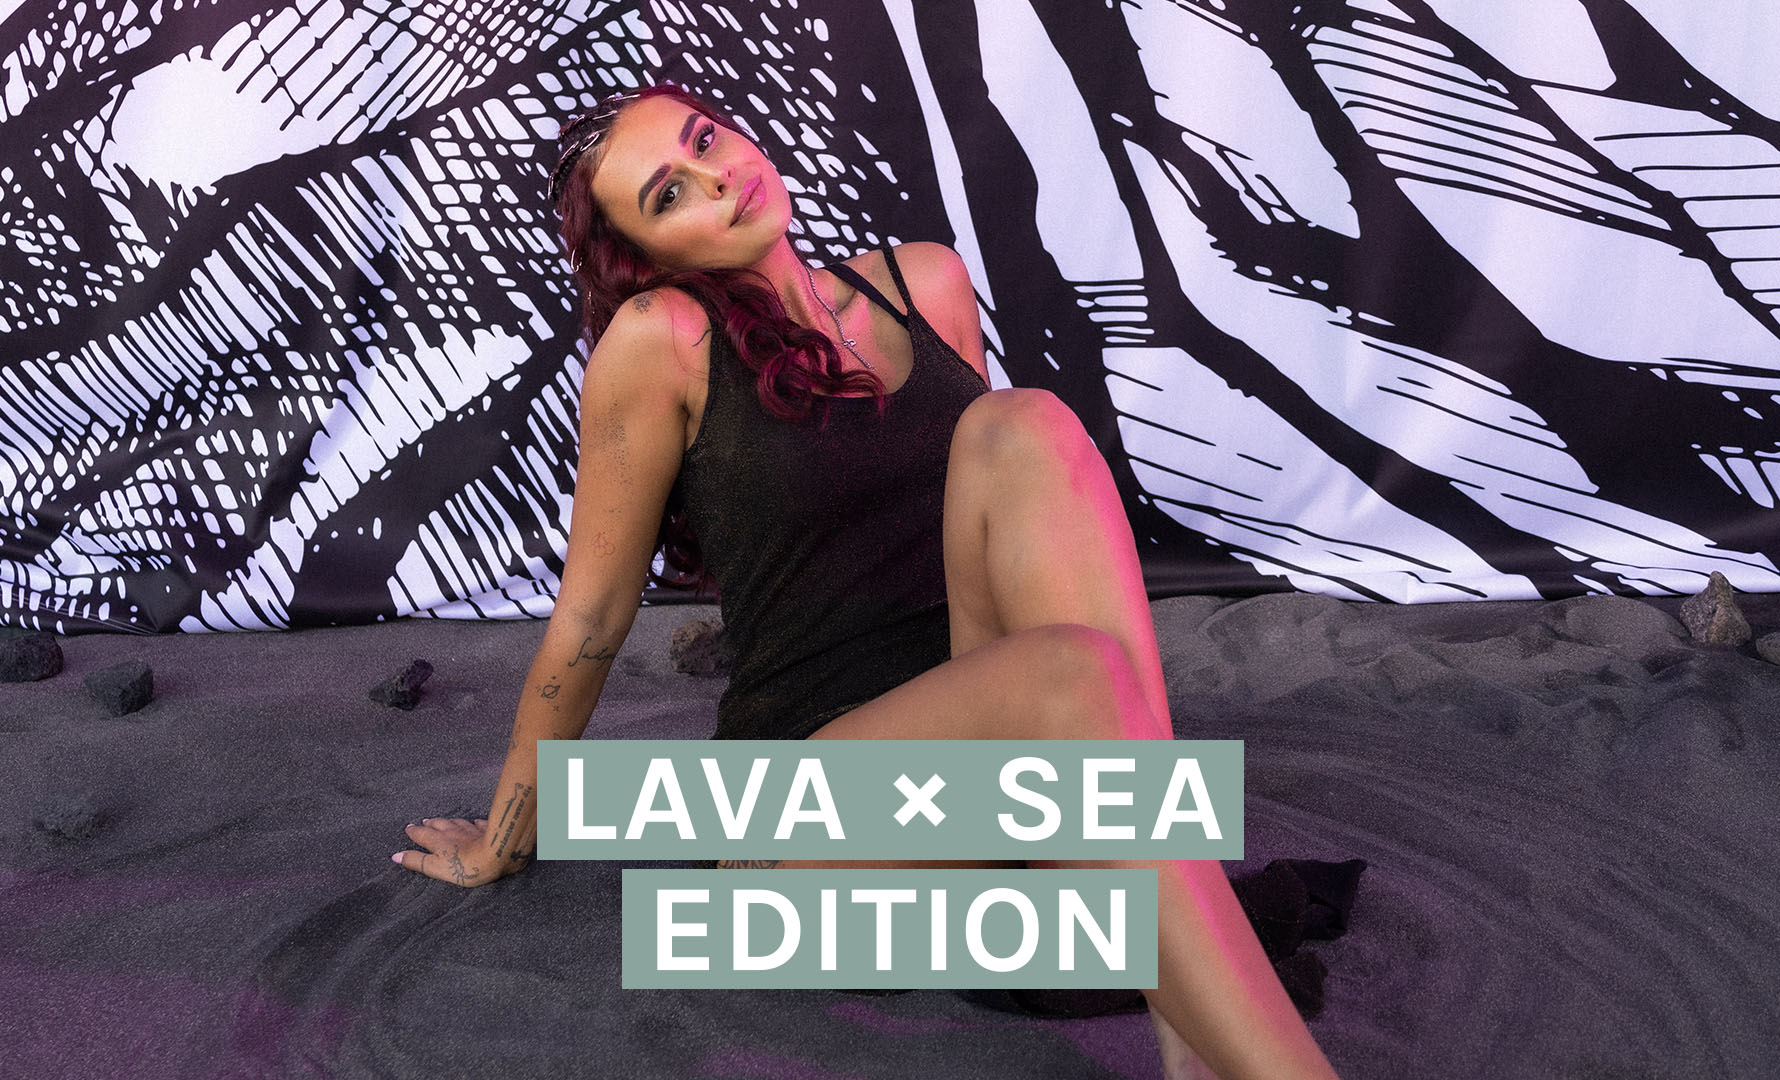 Lava × Sea Edition by @tscherajna